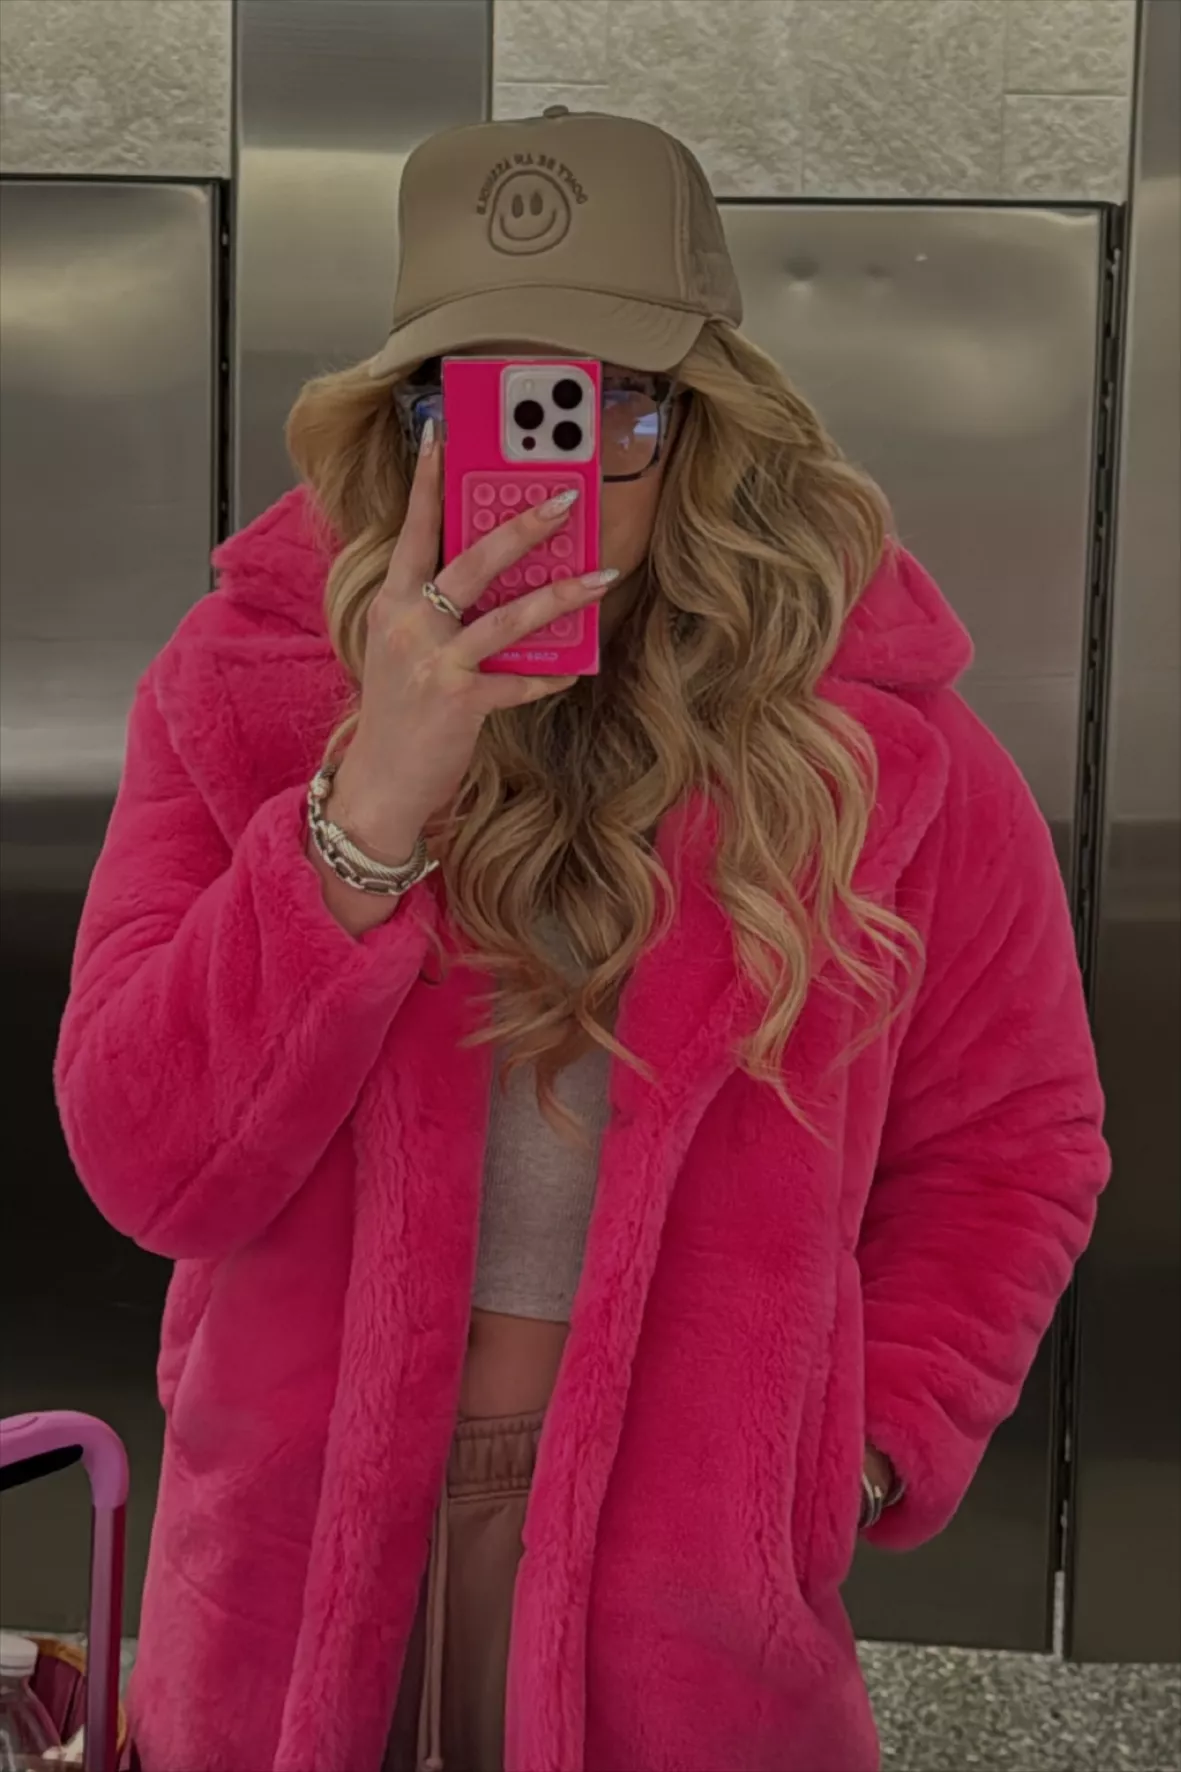 BuddyLove Zoey Oversized Faux Fur Coat - Hot Pink